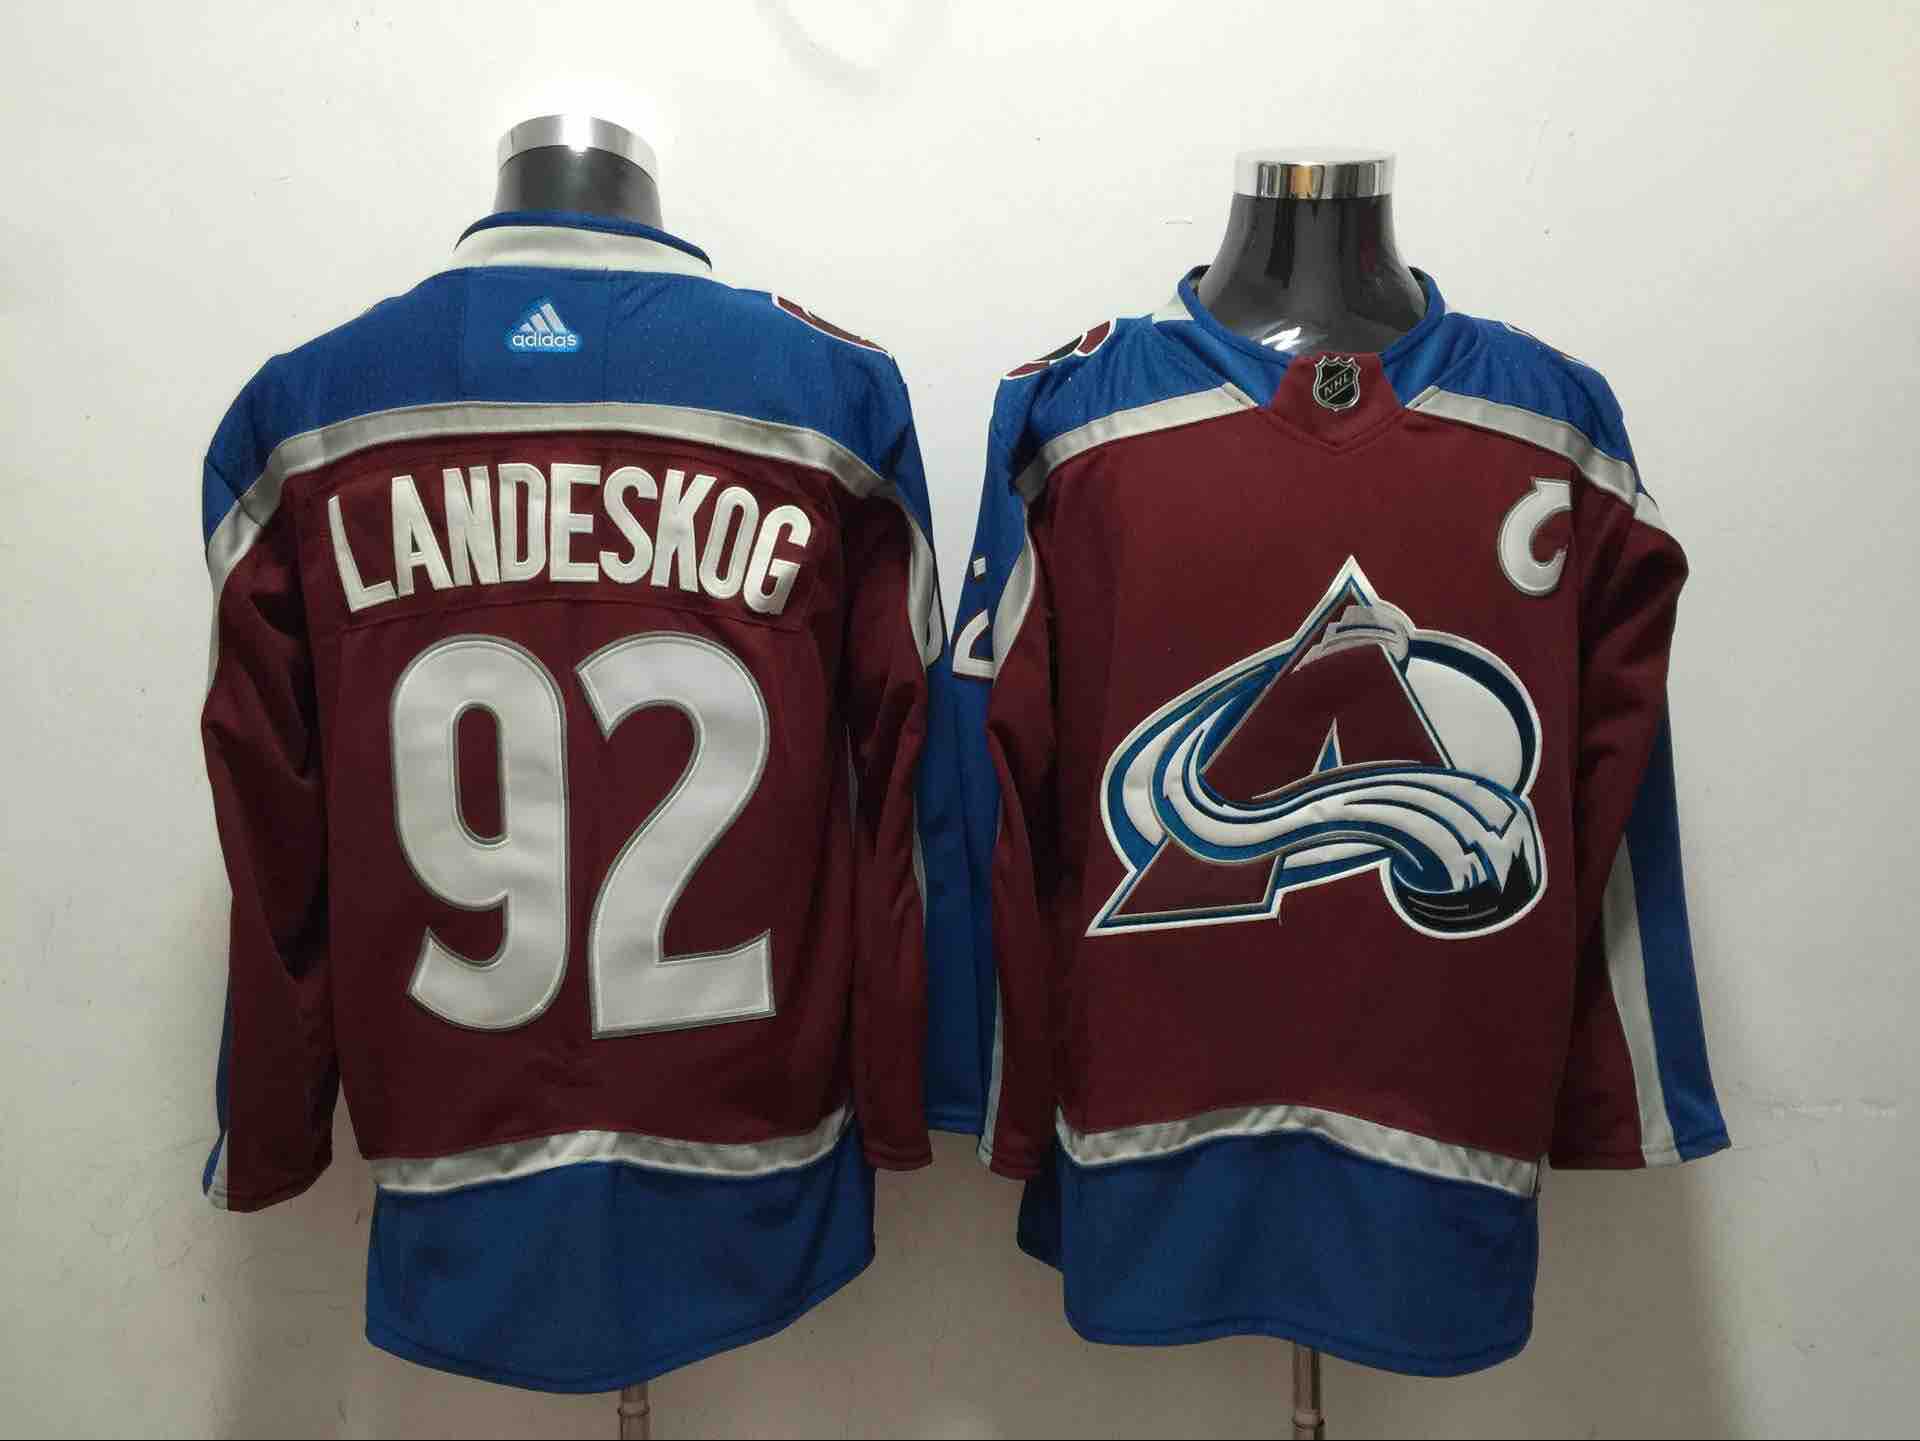 Adidas NHL Colorado Avalanche #92 Landeskog Red Jersey